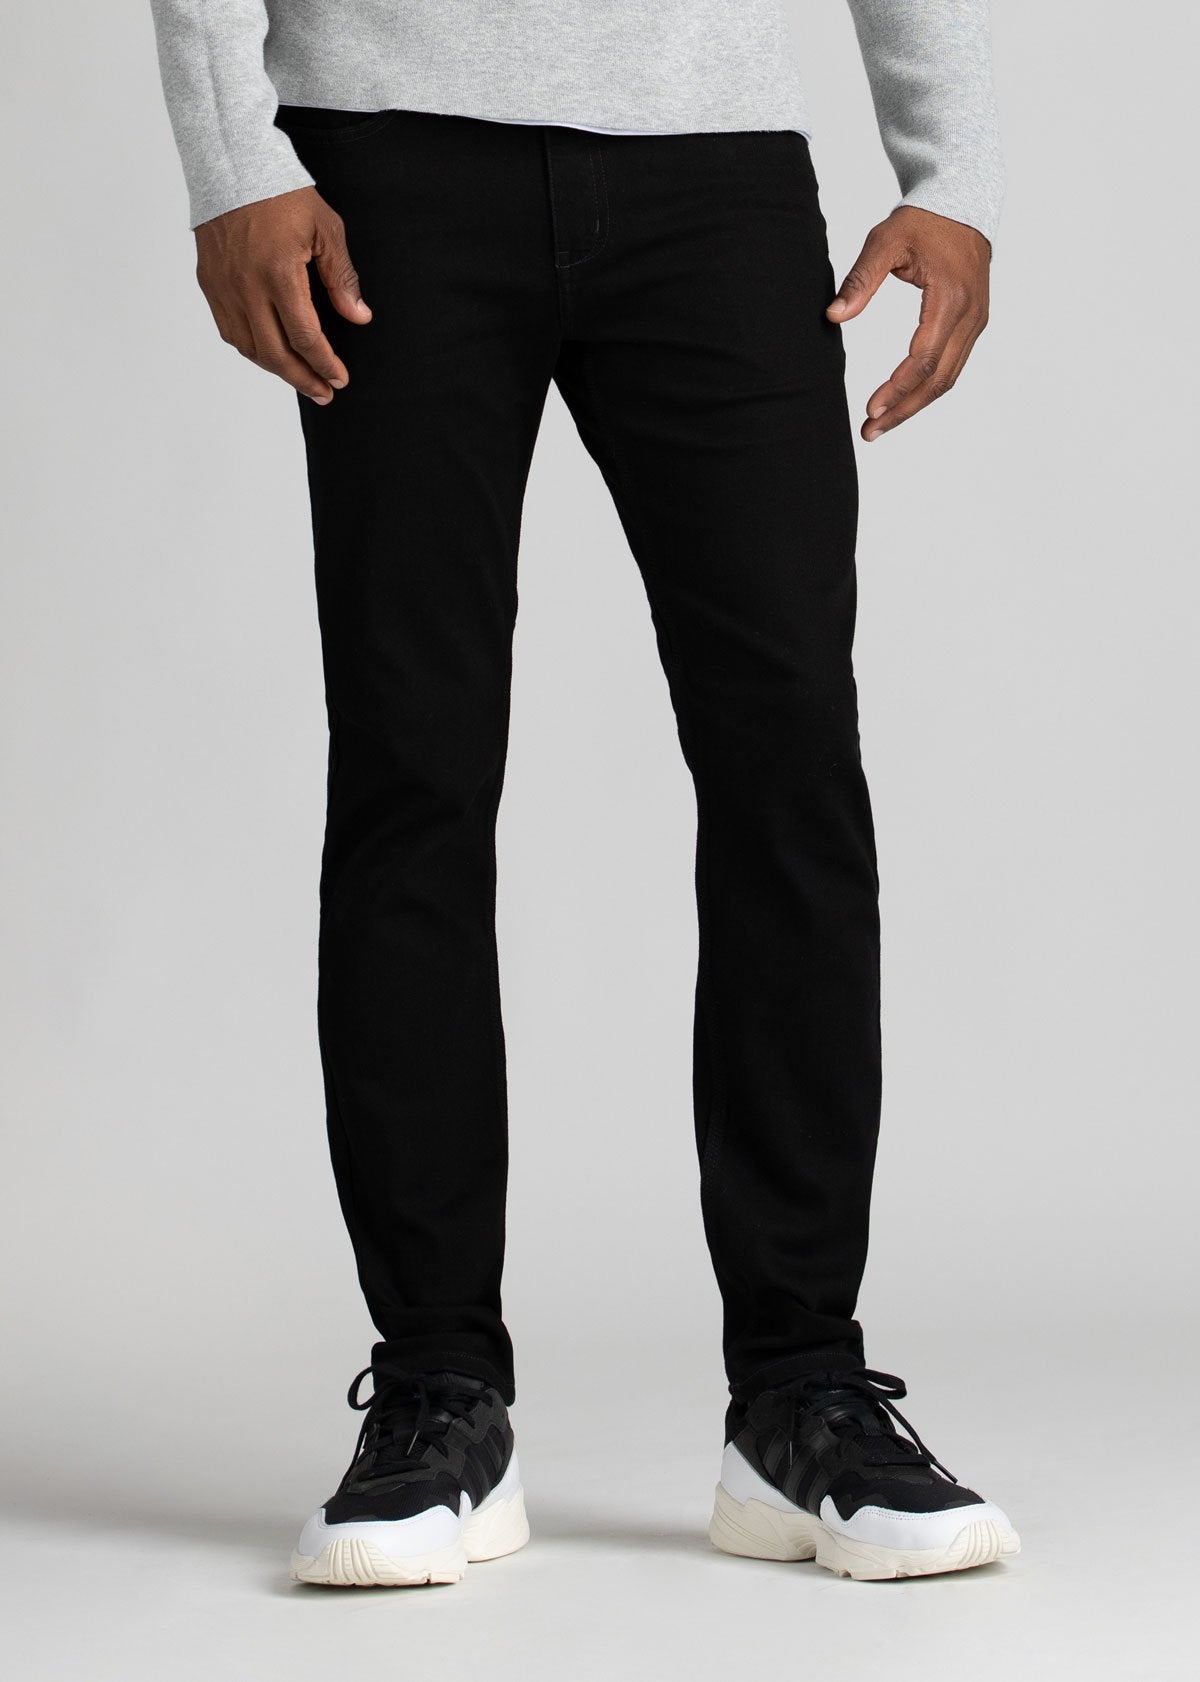 Men's Black Slim Water Resistant Jeans DUER